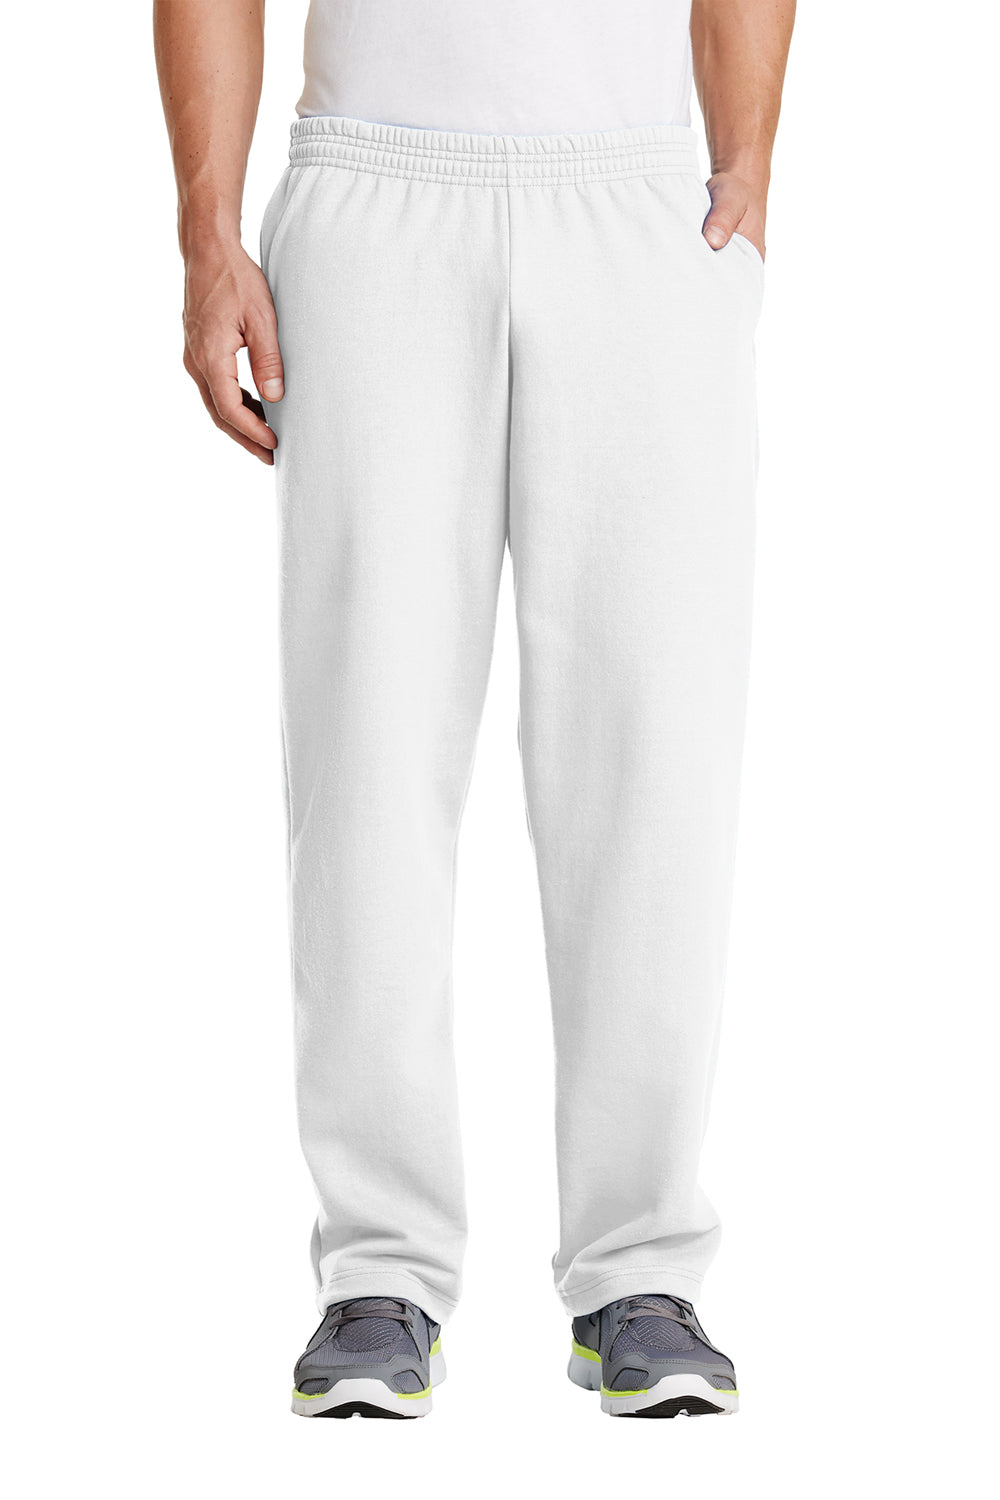 Eddie Bauer Lounge Pants Mens 2XL XXL Sweatpants Pockets